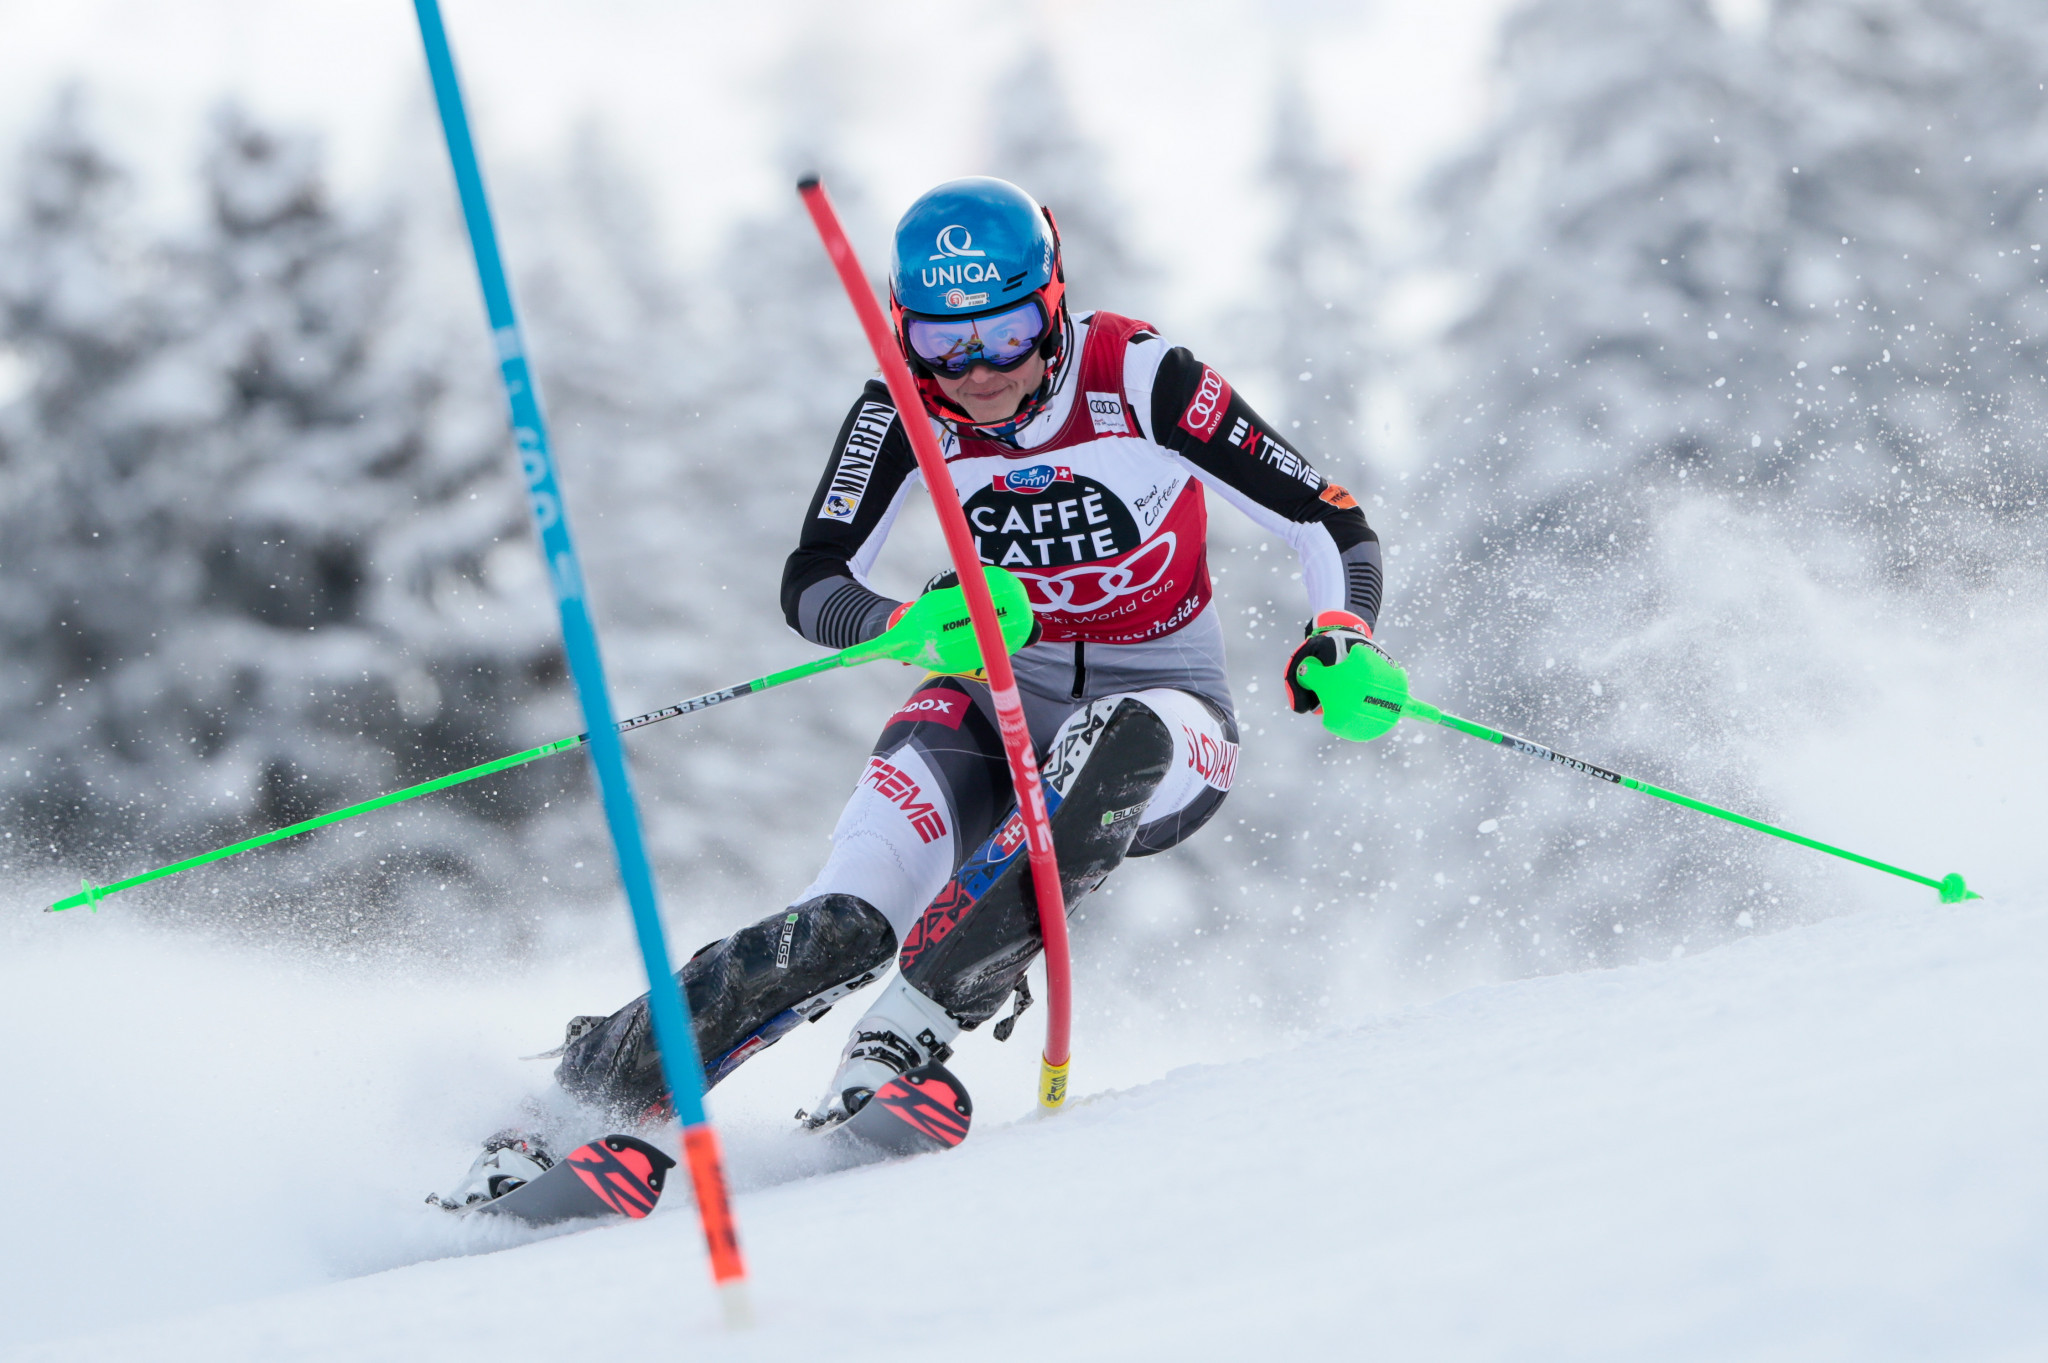 World Cup champion Vlhová wins third slalom race of season in Lienz